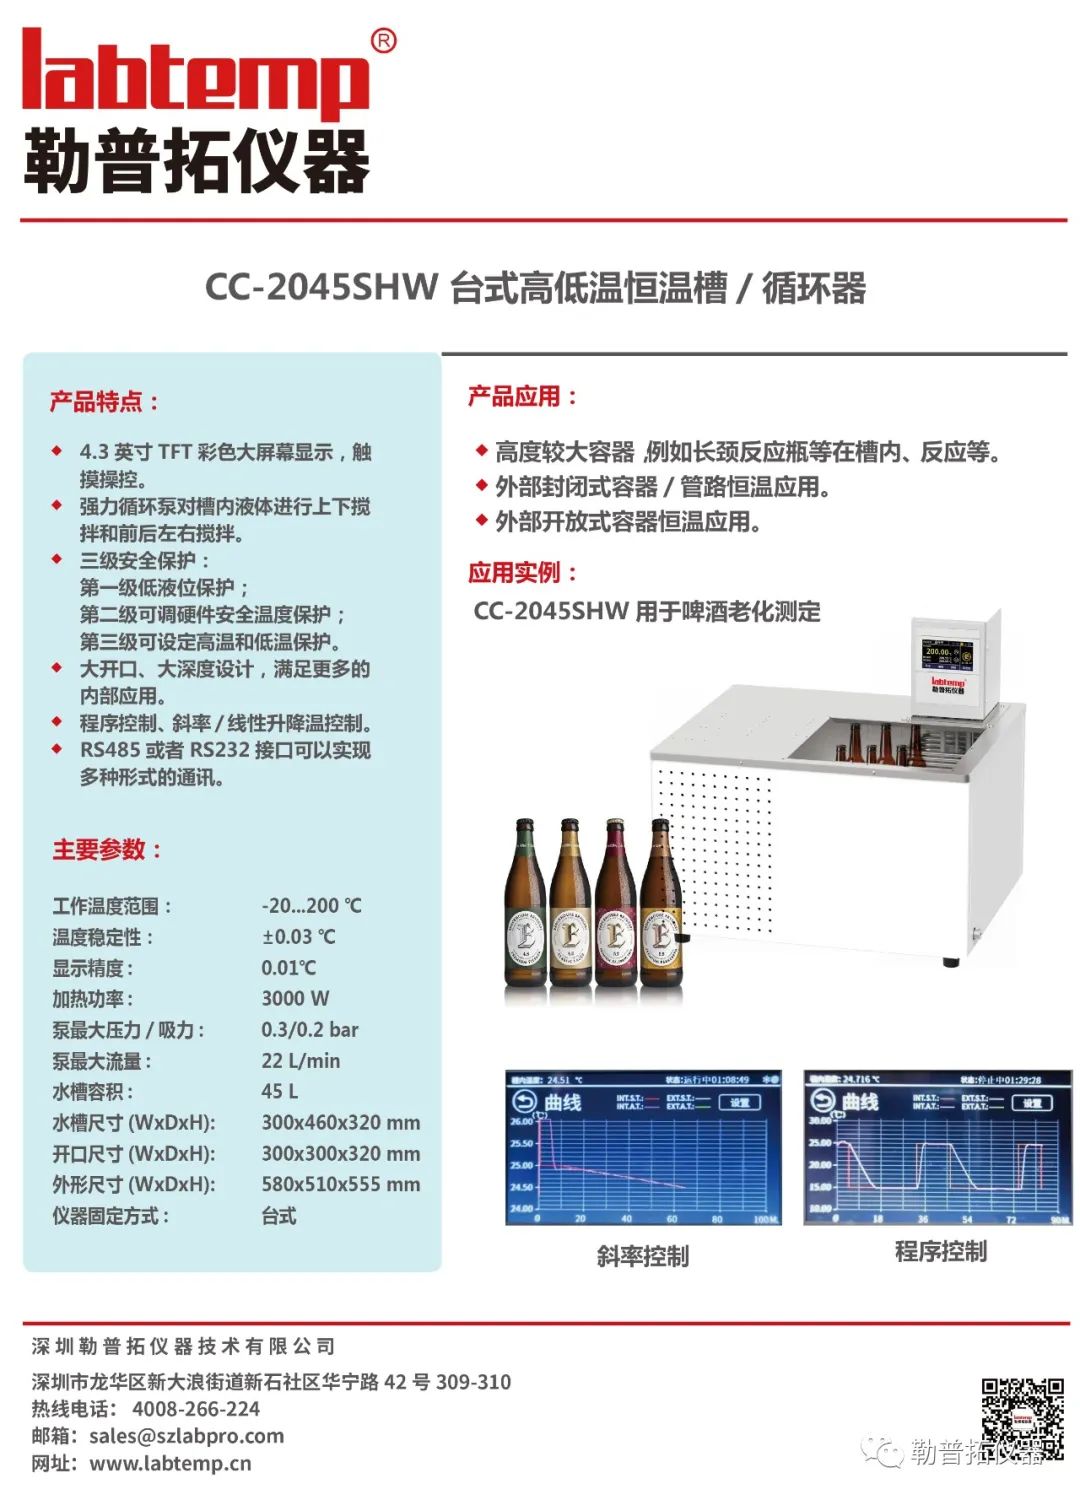 CC-2045SHW 台式高低温恒温槽/循环器